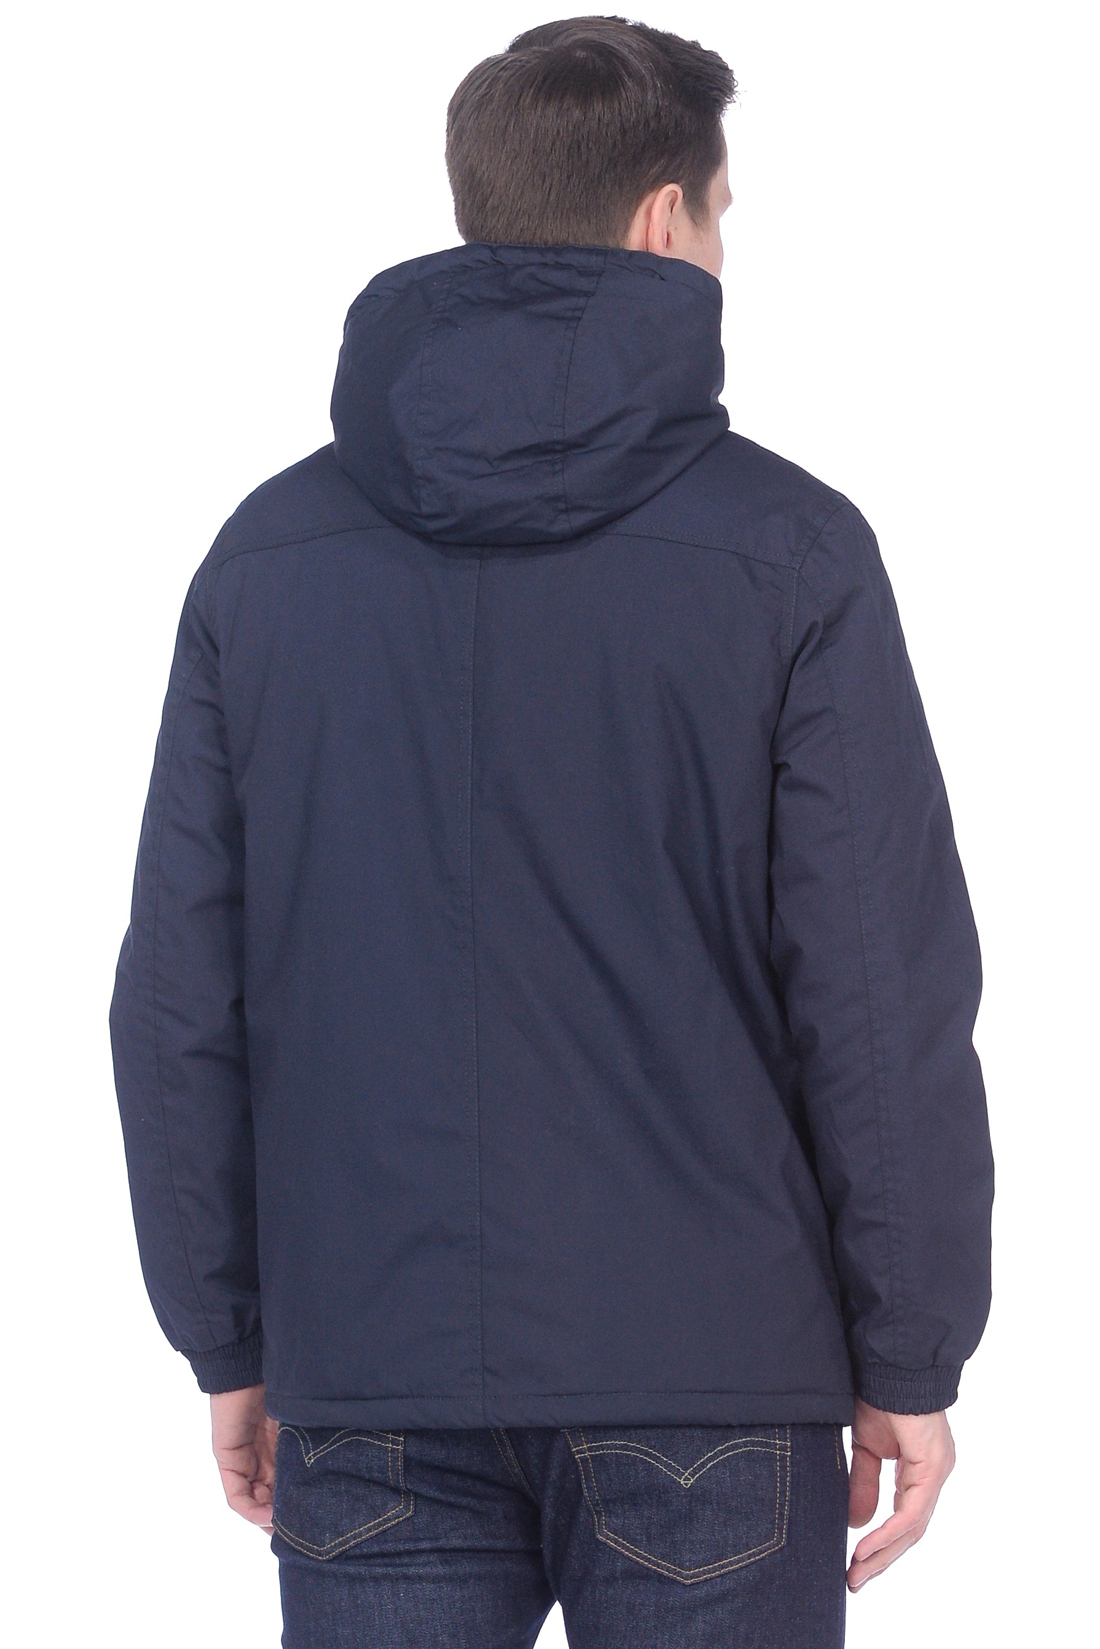 Куртка с белой отделкой (арт. baon B539025), размер XL, цвет синий Куртка с белой отделкой (арт. baon B539025) - фото 5